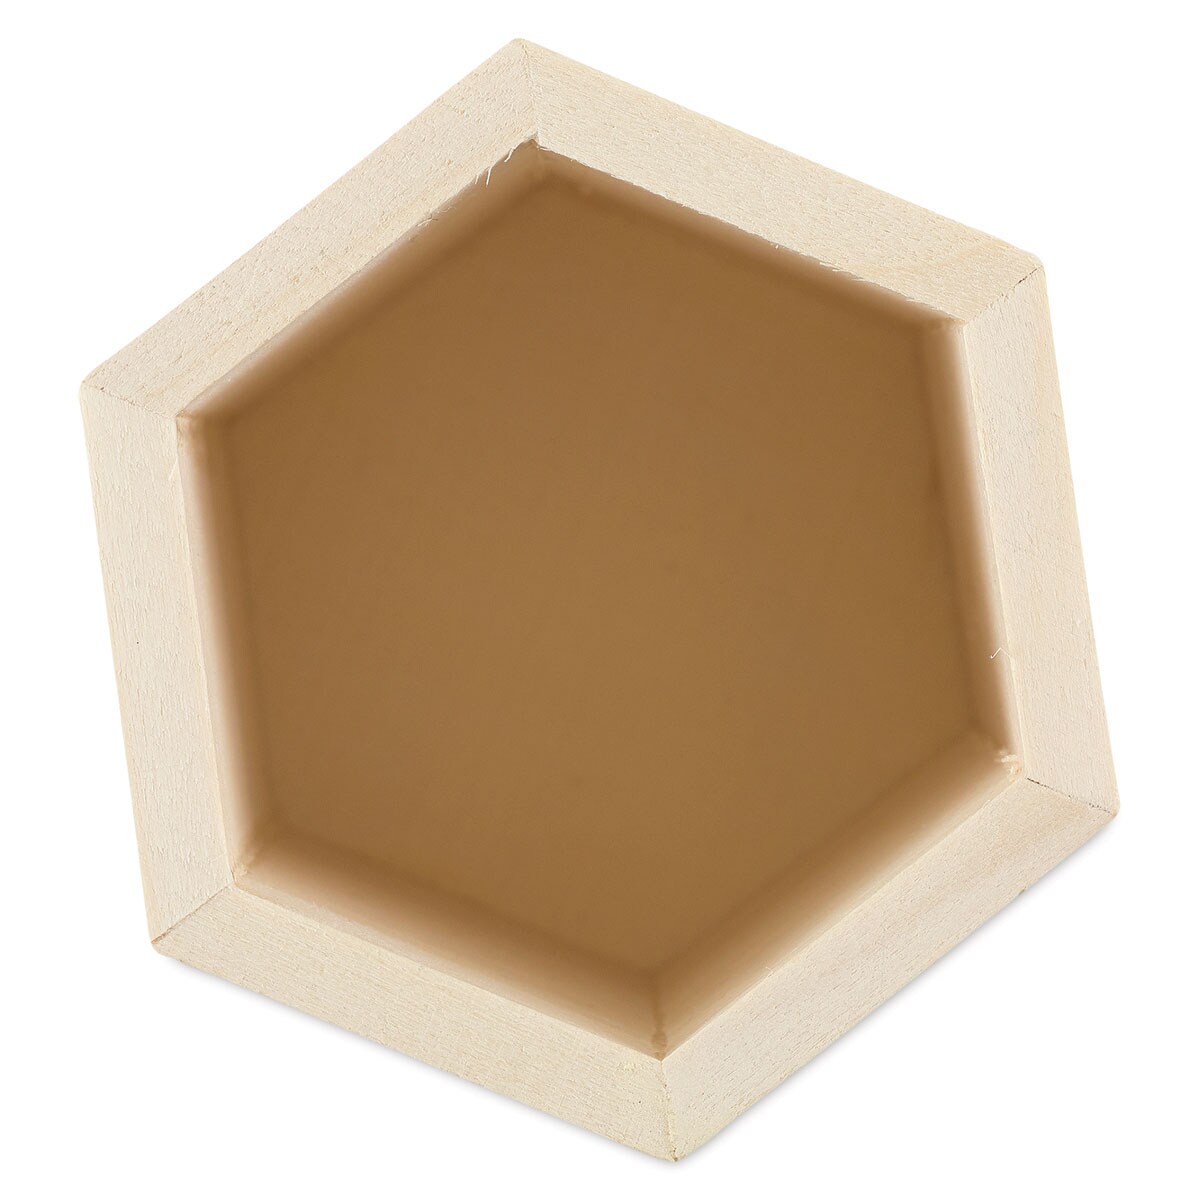 MultiCraft Wood Desk Organizer - Hexagon